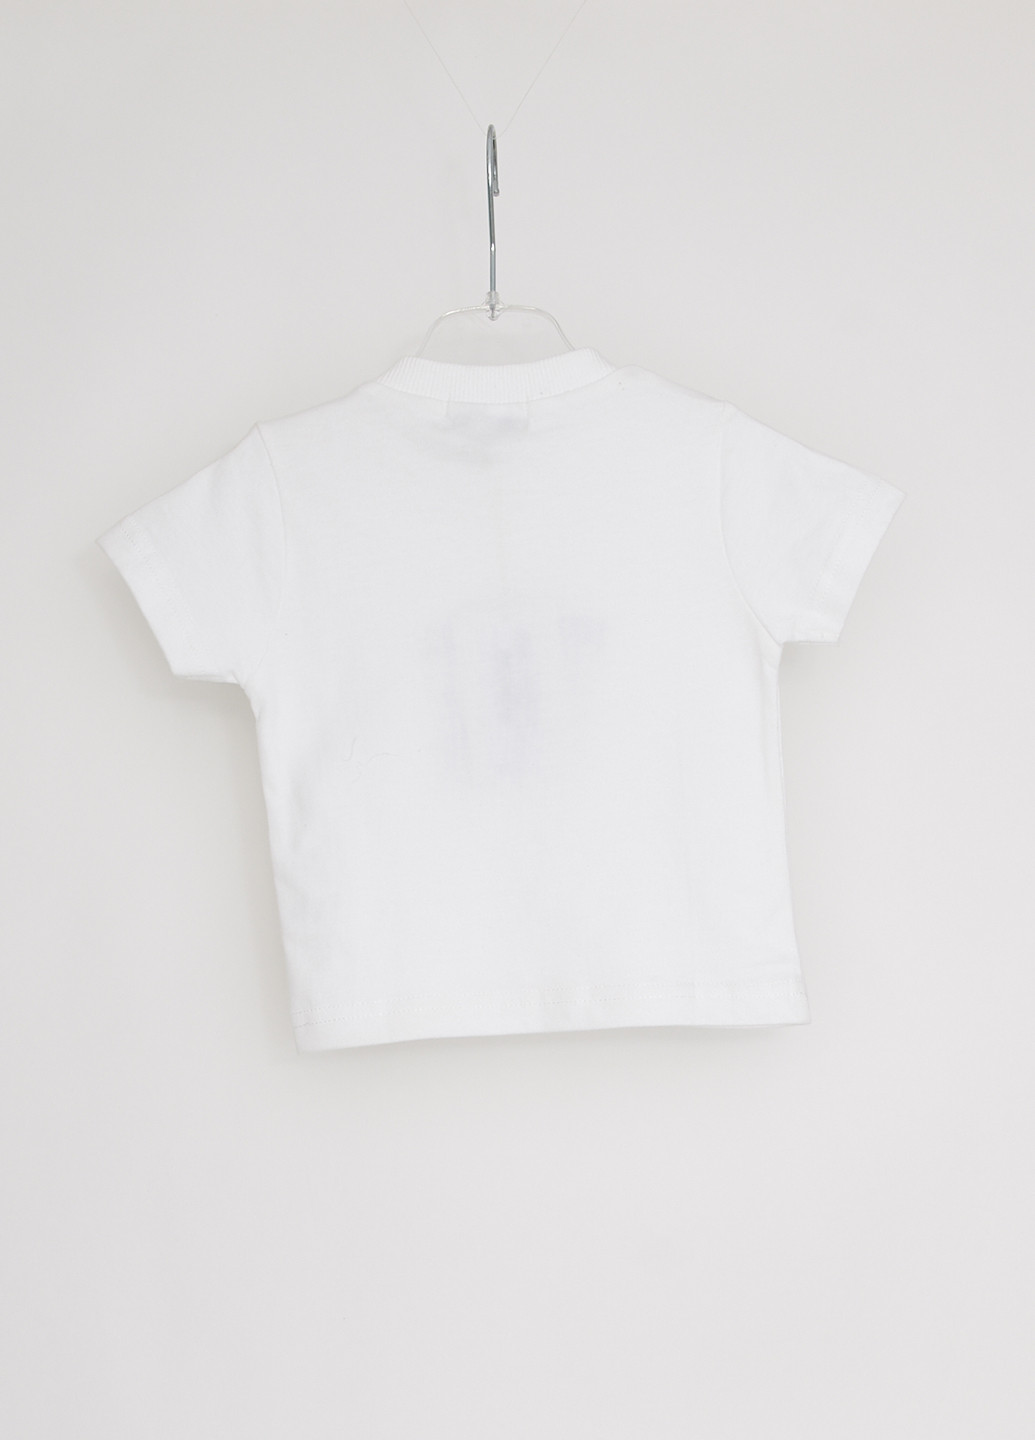 Белая летняя футболка Marasil